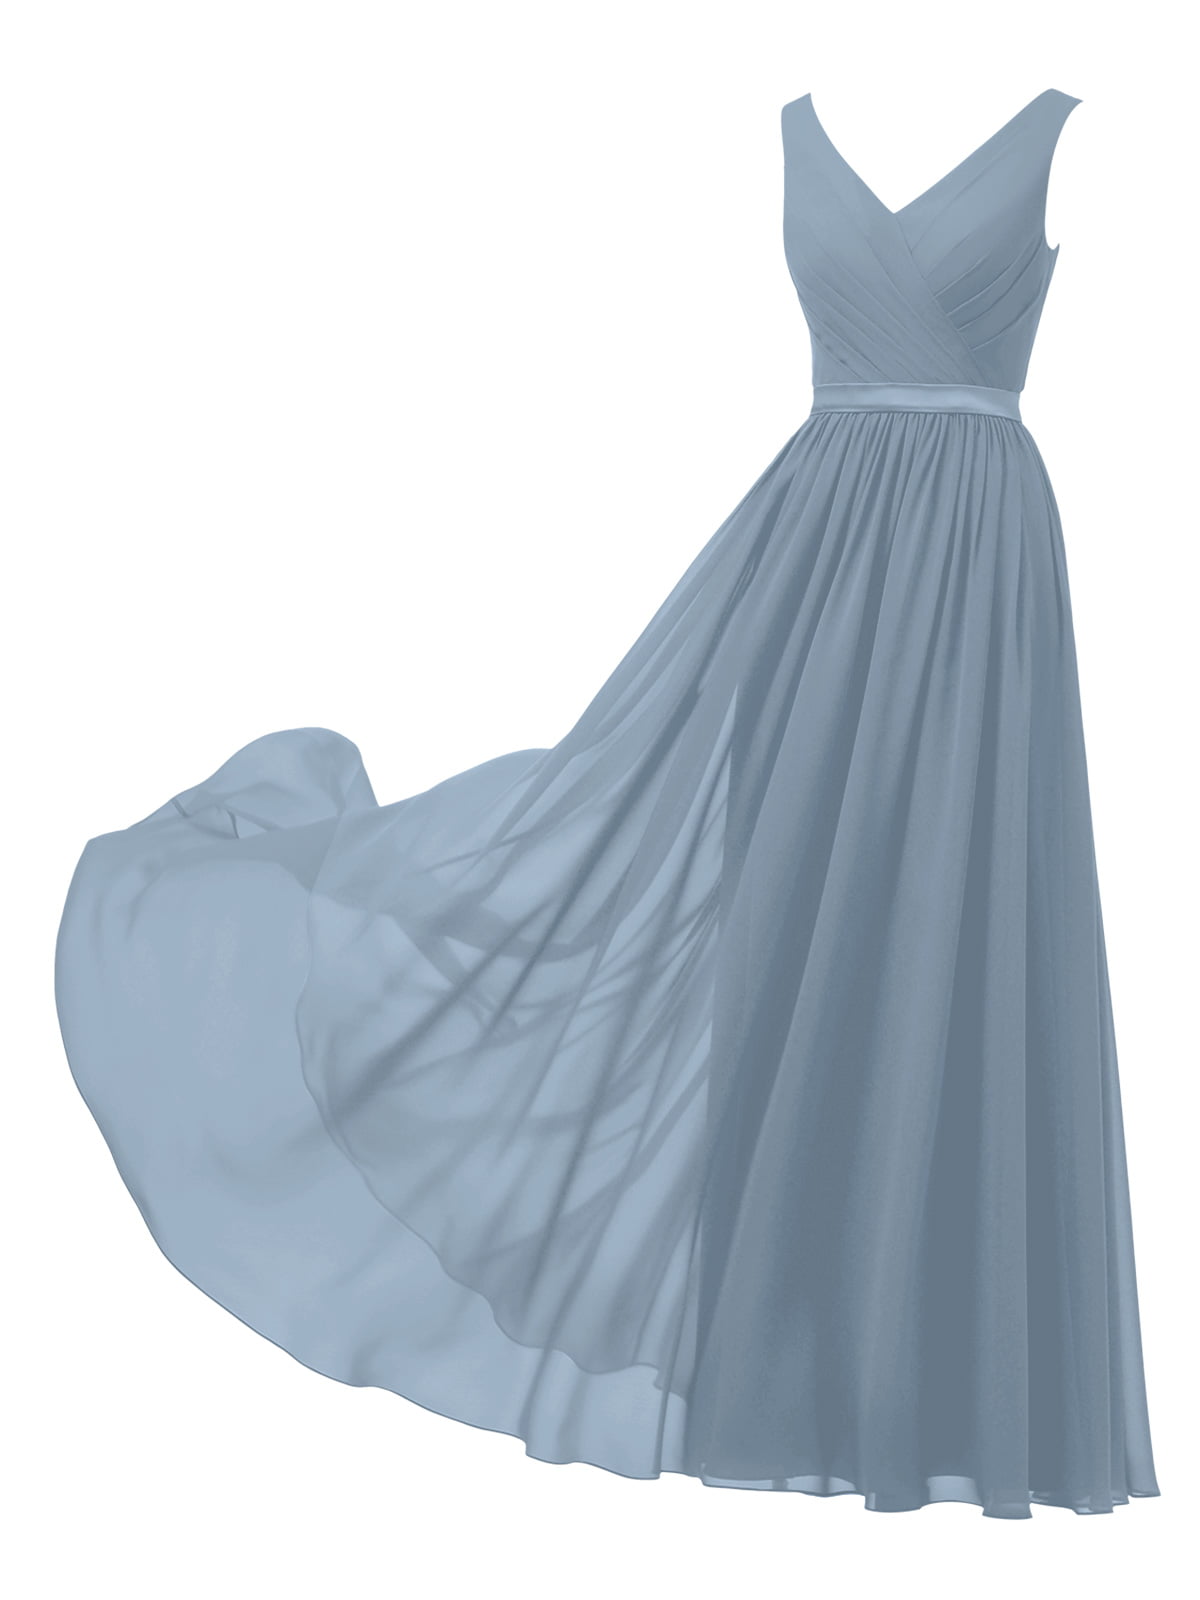 Chiffon Bridesmaid Dress A Line Prom Ballgown Maxi Wedding Evening Plus size 